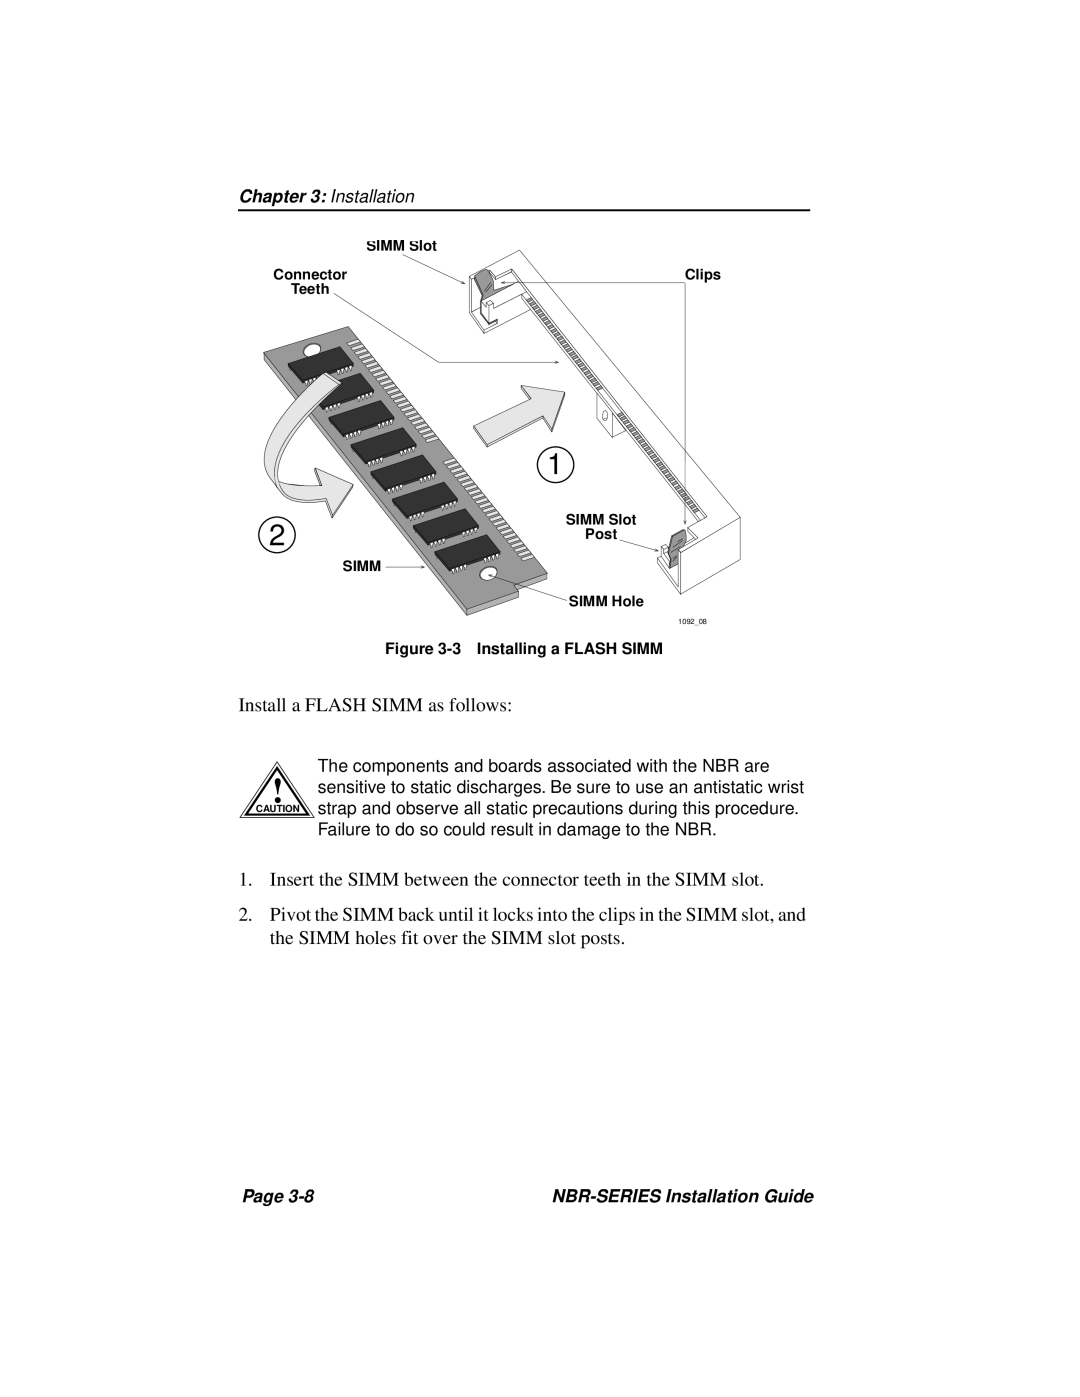 Cabletron Systems NBR-220, NBR-420, NBR-620 manual Install a FLASH SIMM as follows 